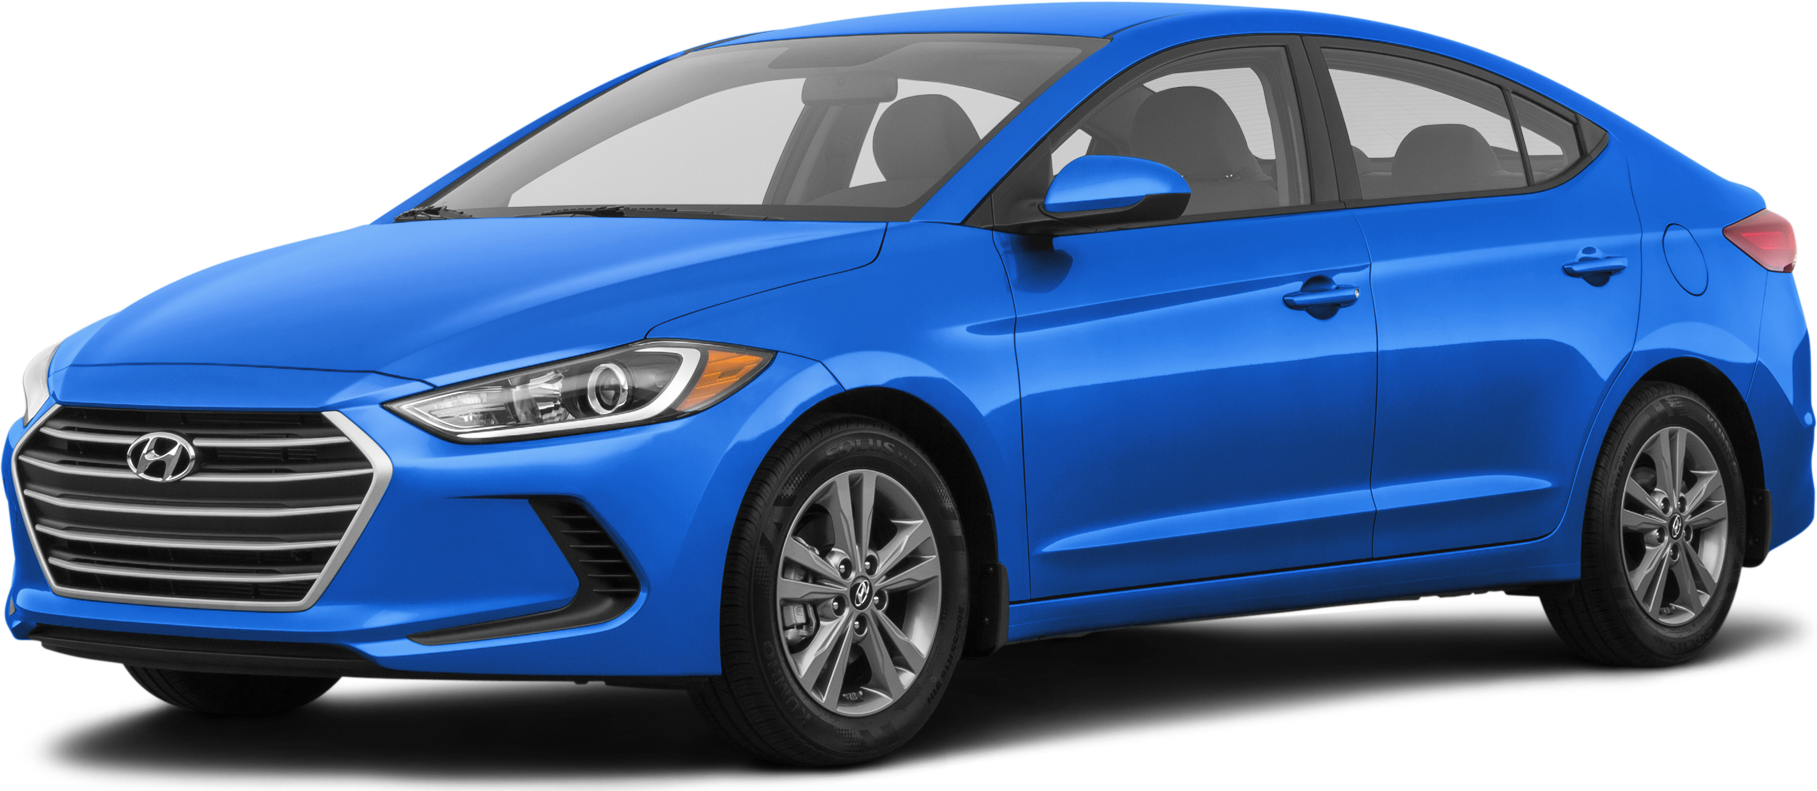 2018 Hyundai Elantra Price, Value, Ratings & Reviews | Kelley Blue Book